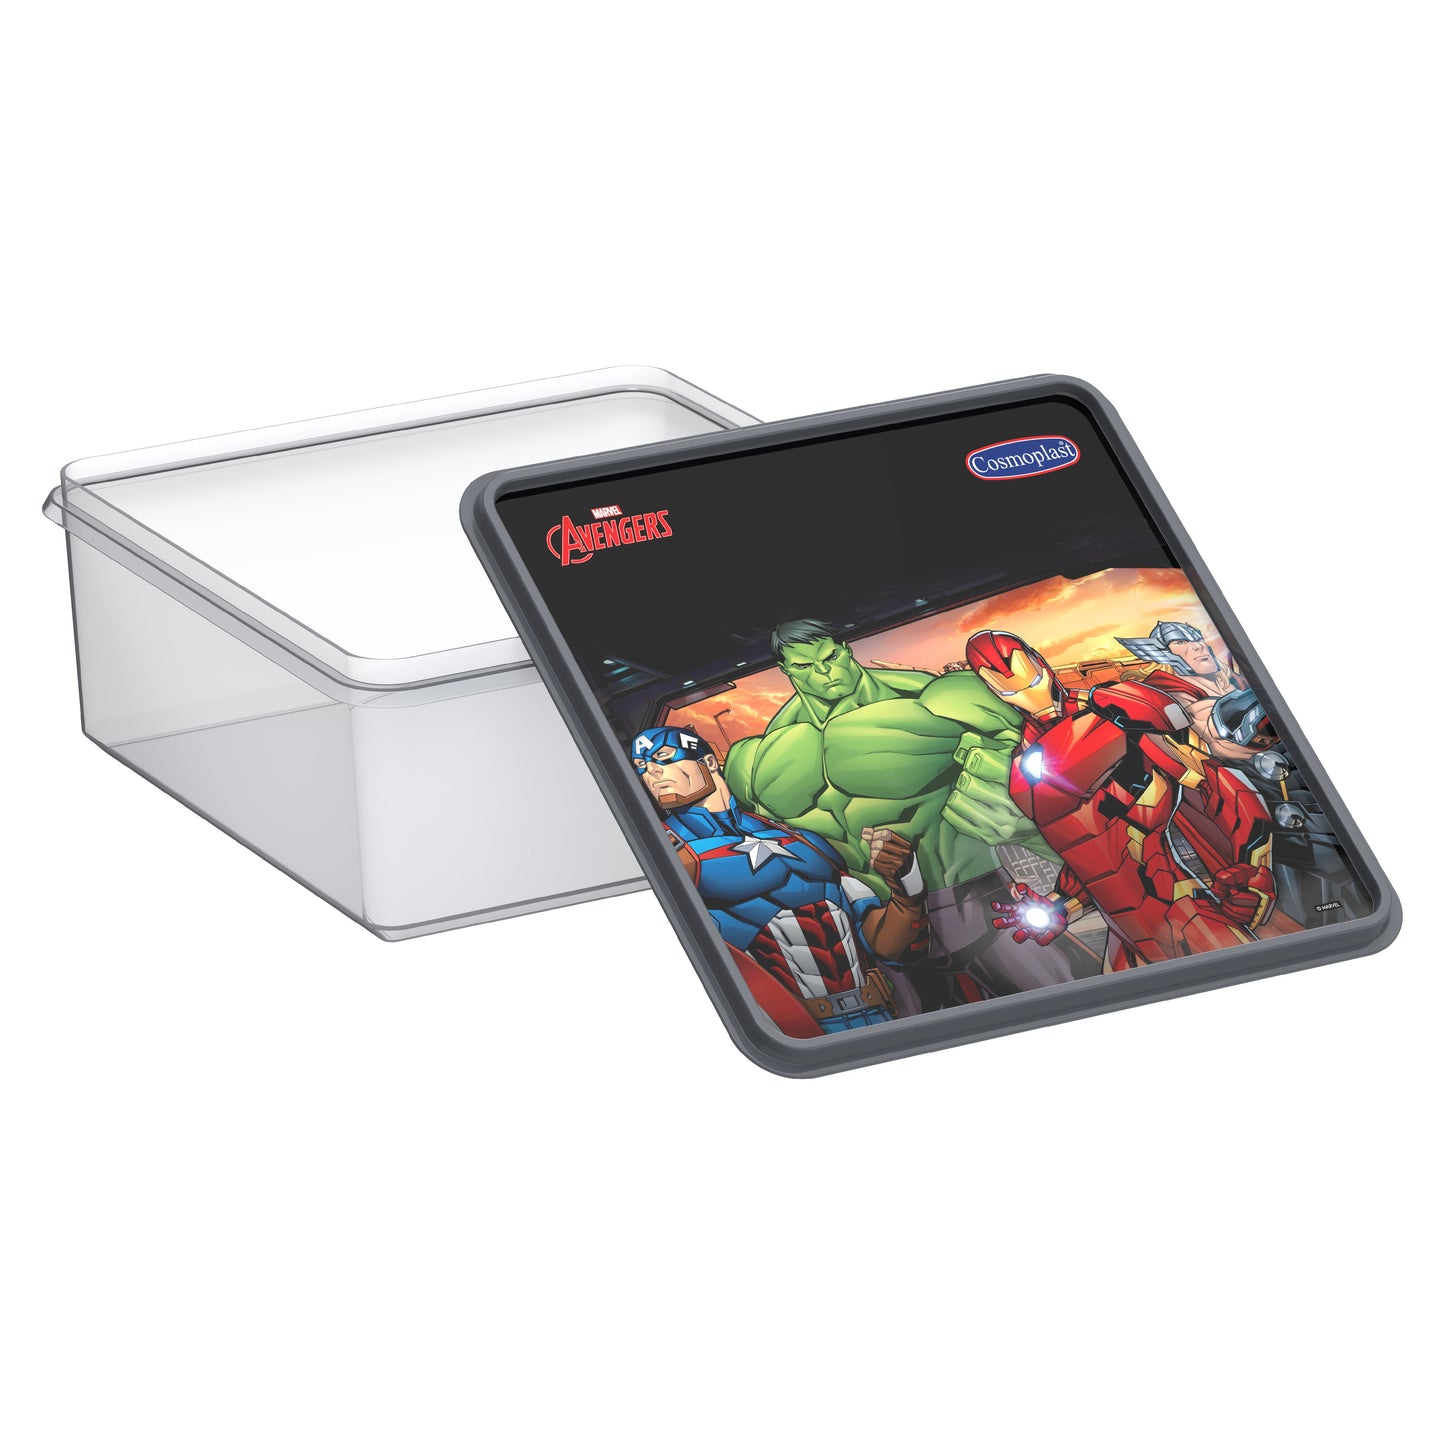 Cosmoplast Disney Marvel Avengers Storage Box 8 Liters